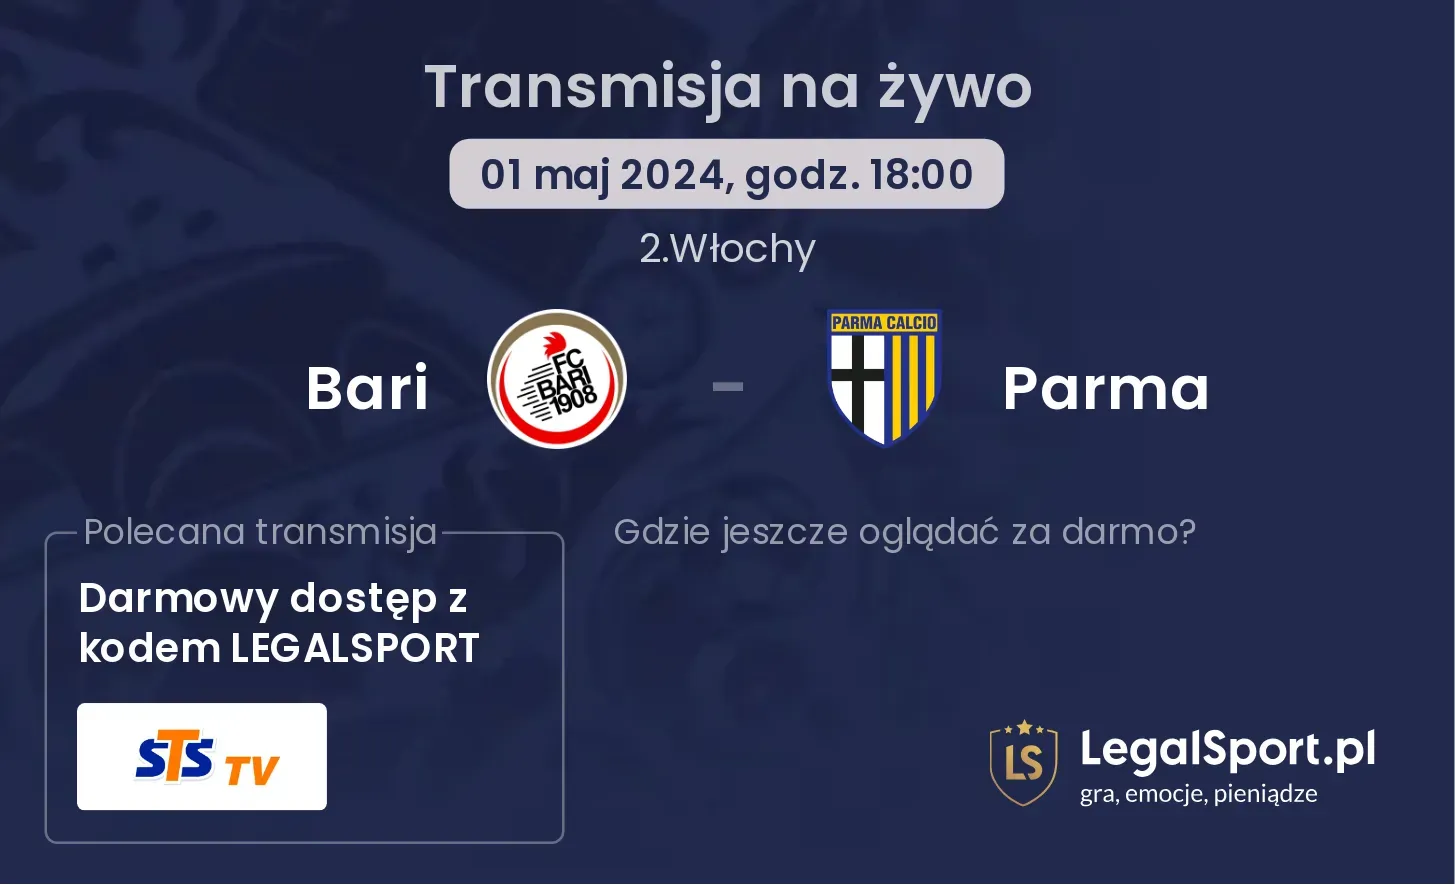 Bari - Parma transmisja na żywo